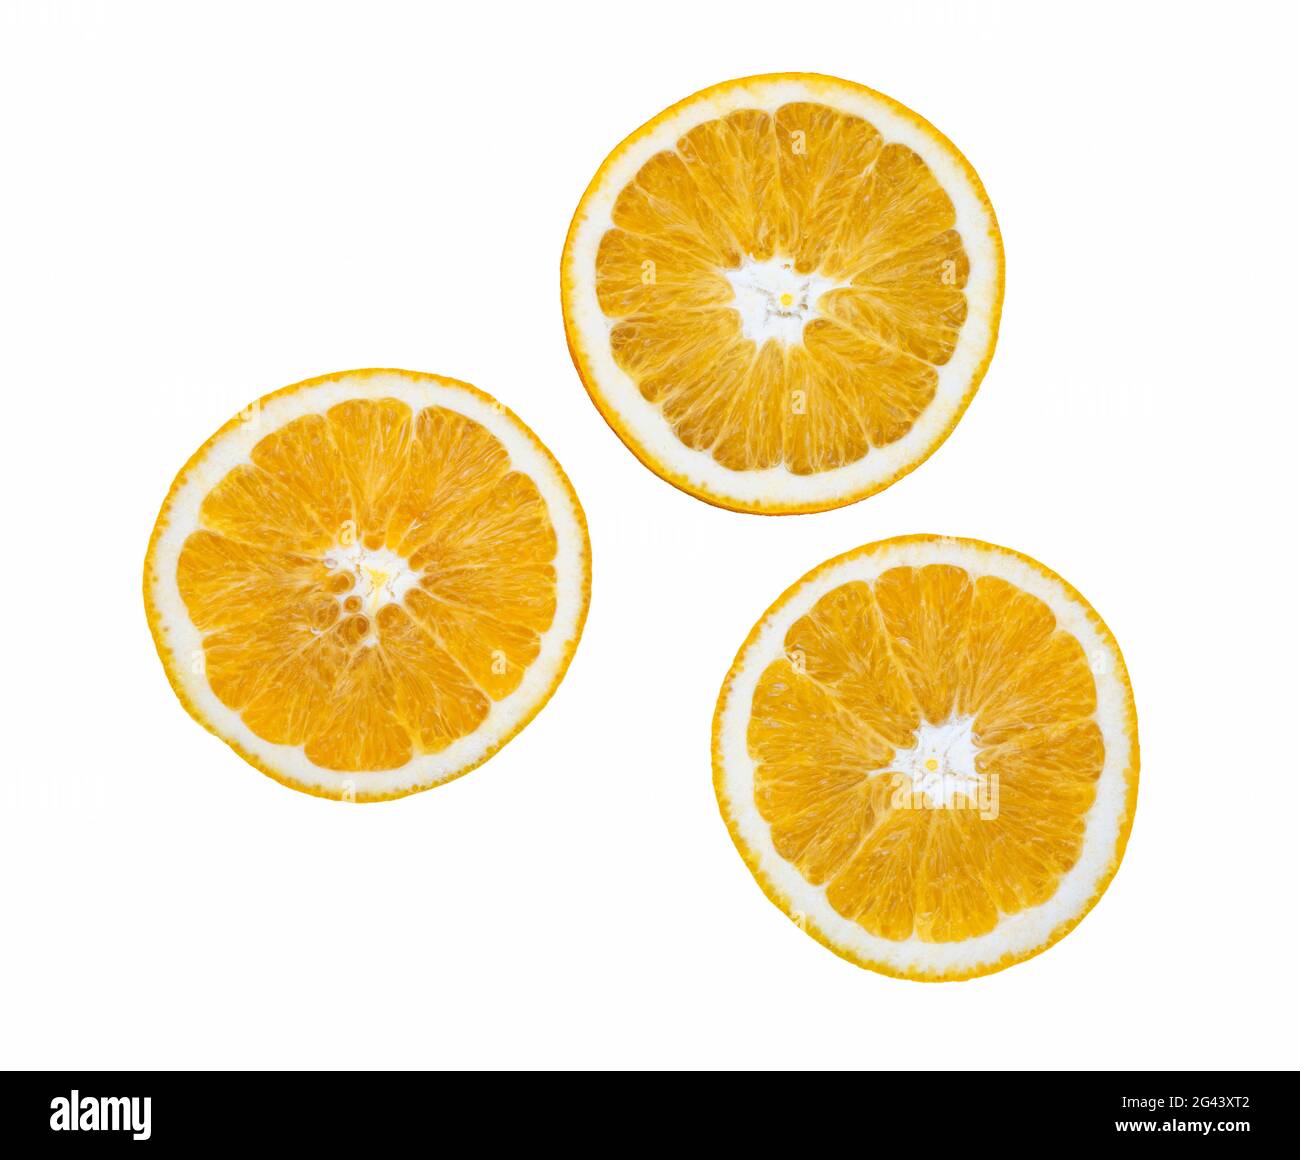 Three orange slices against white background Stock Photo